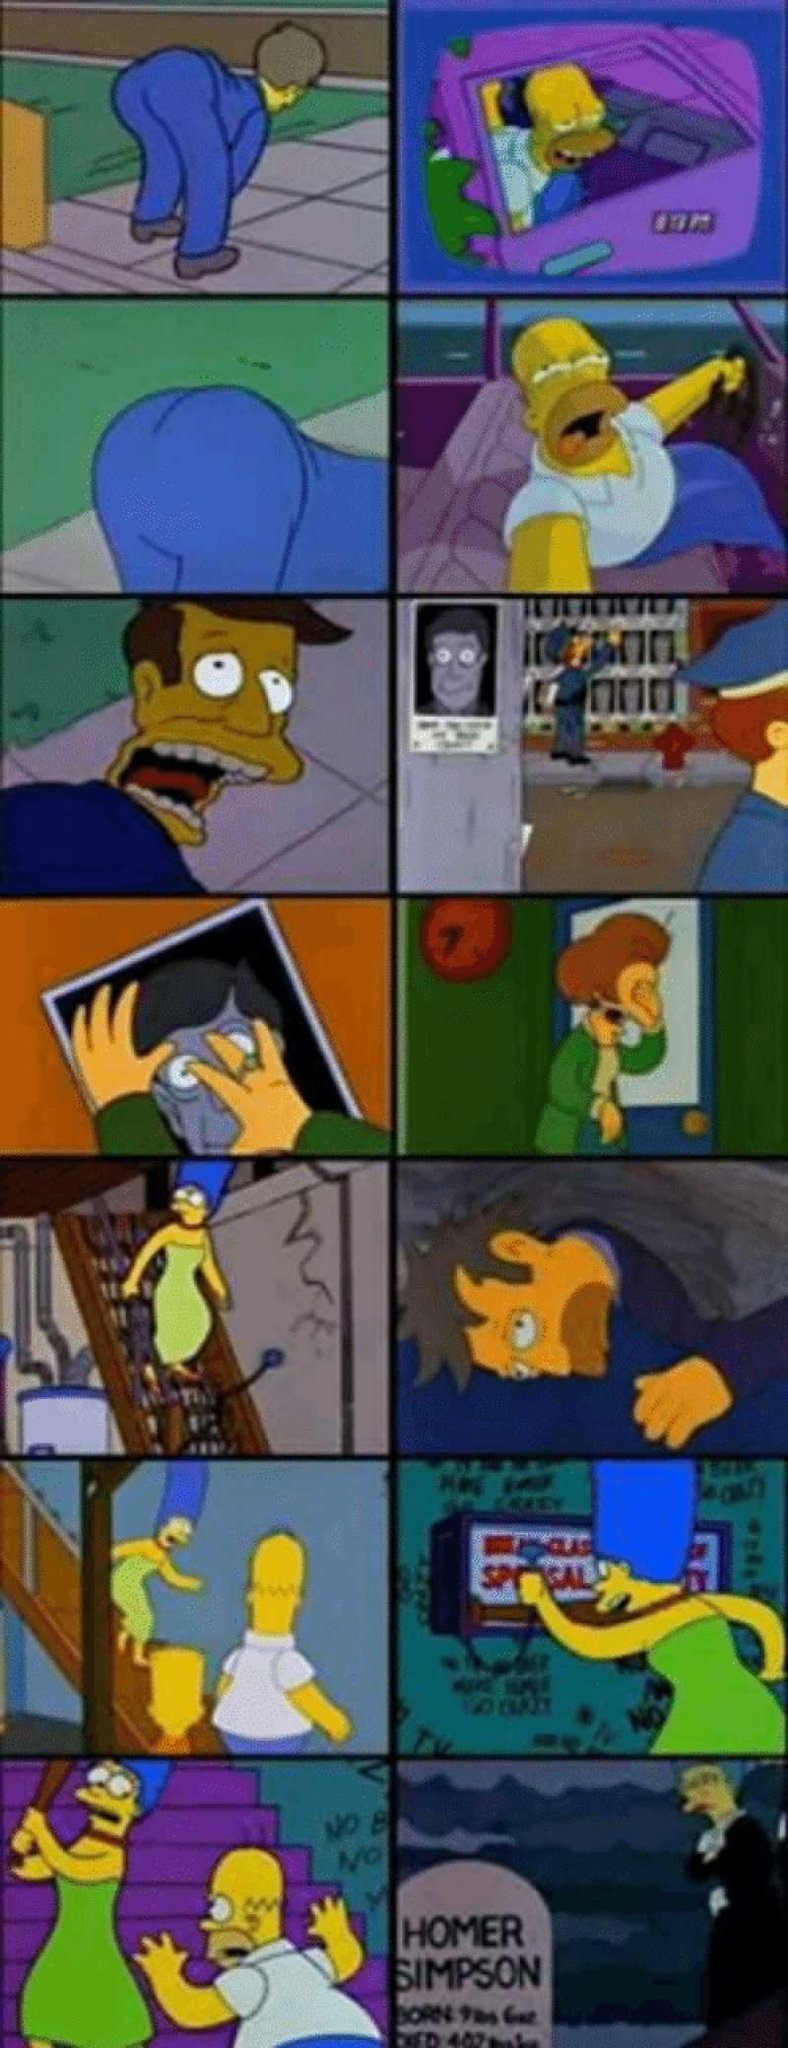 Homero trolo simpson - meme